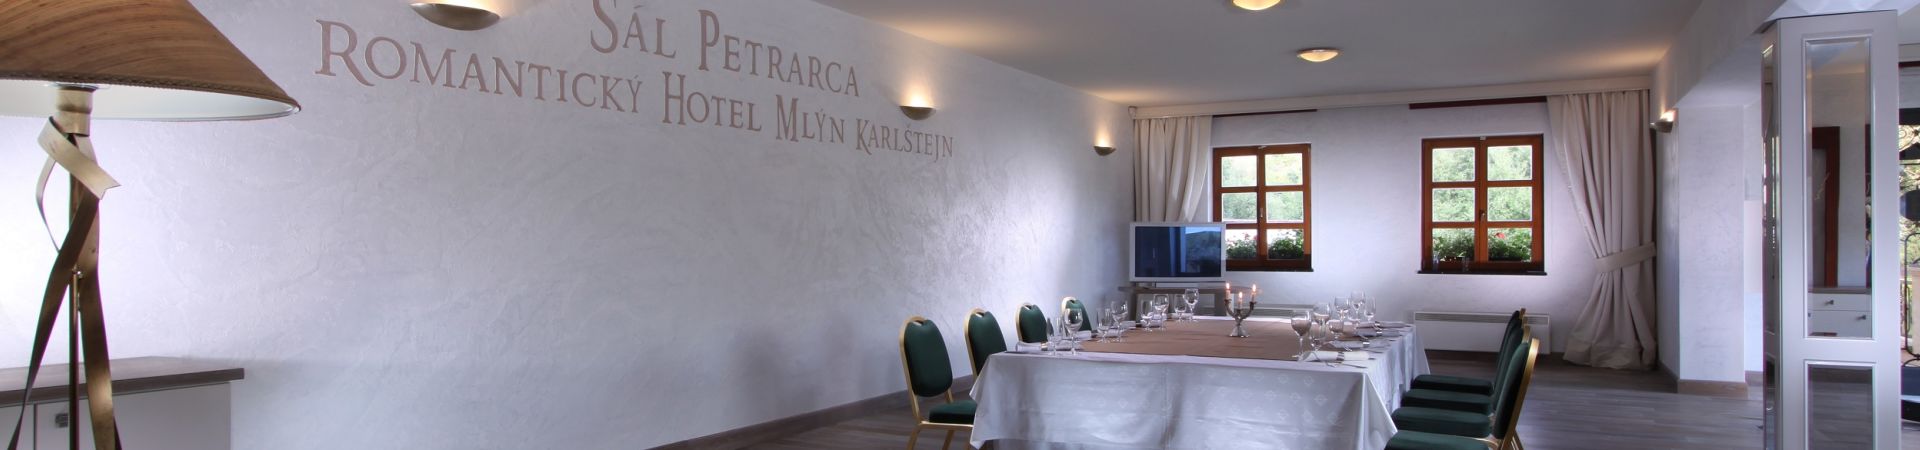 Romantický Hotel Mlýn Karlštejn - Sál Petrarca s terasou